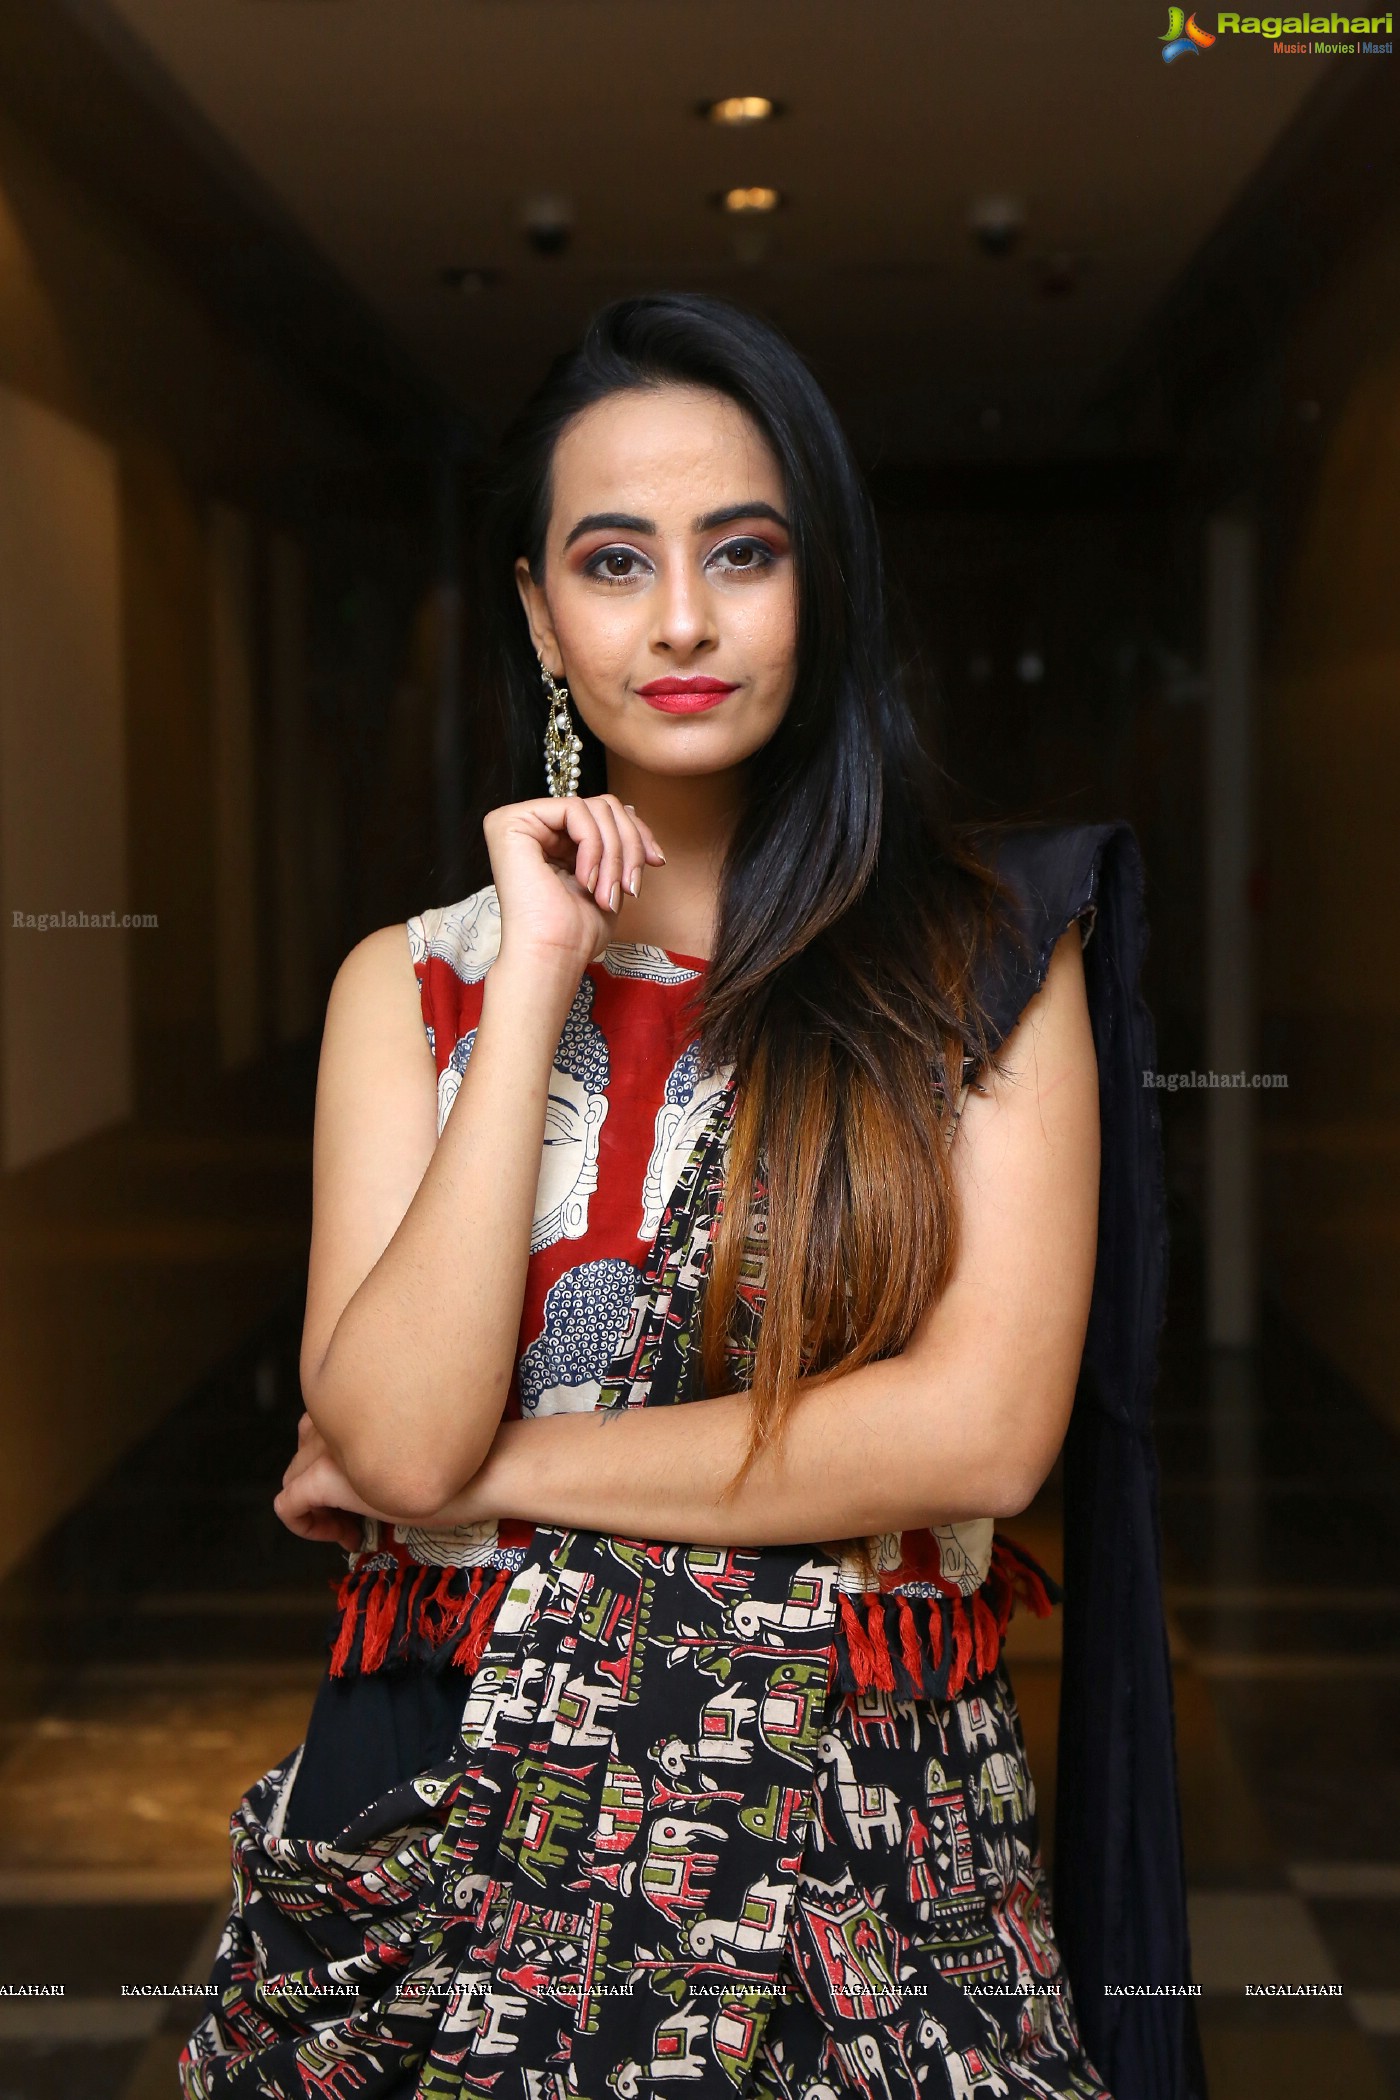 Ameeksha Amy Pawar at Sutraa Designer Fashion Exhibition 2018 (Posters)